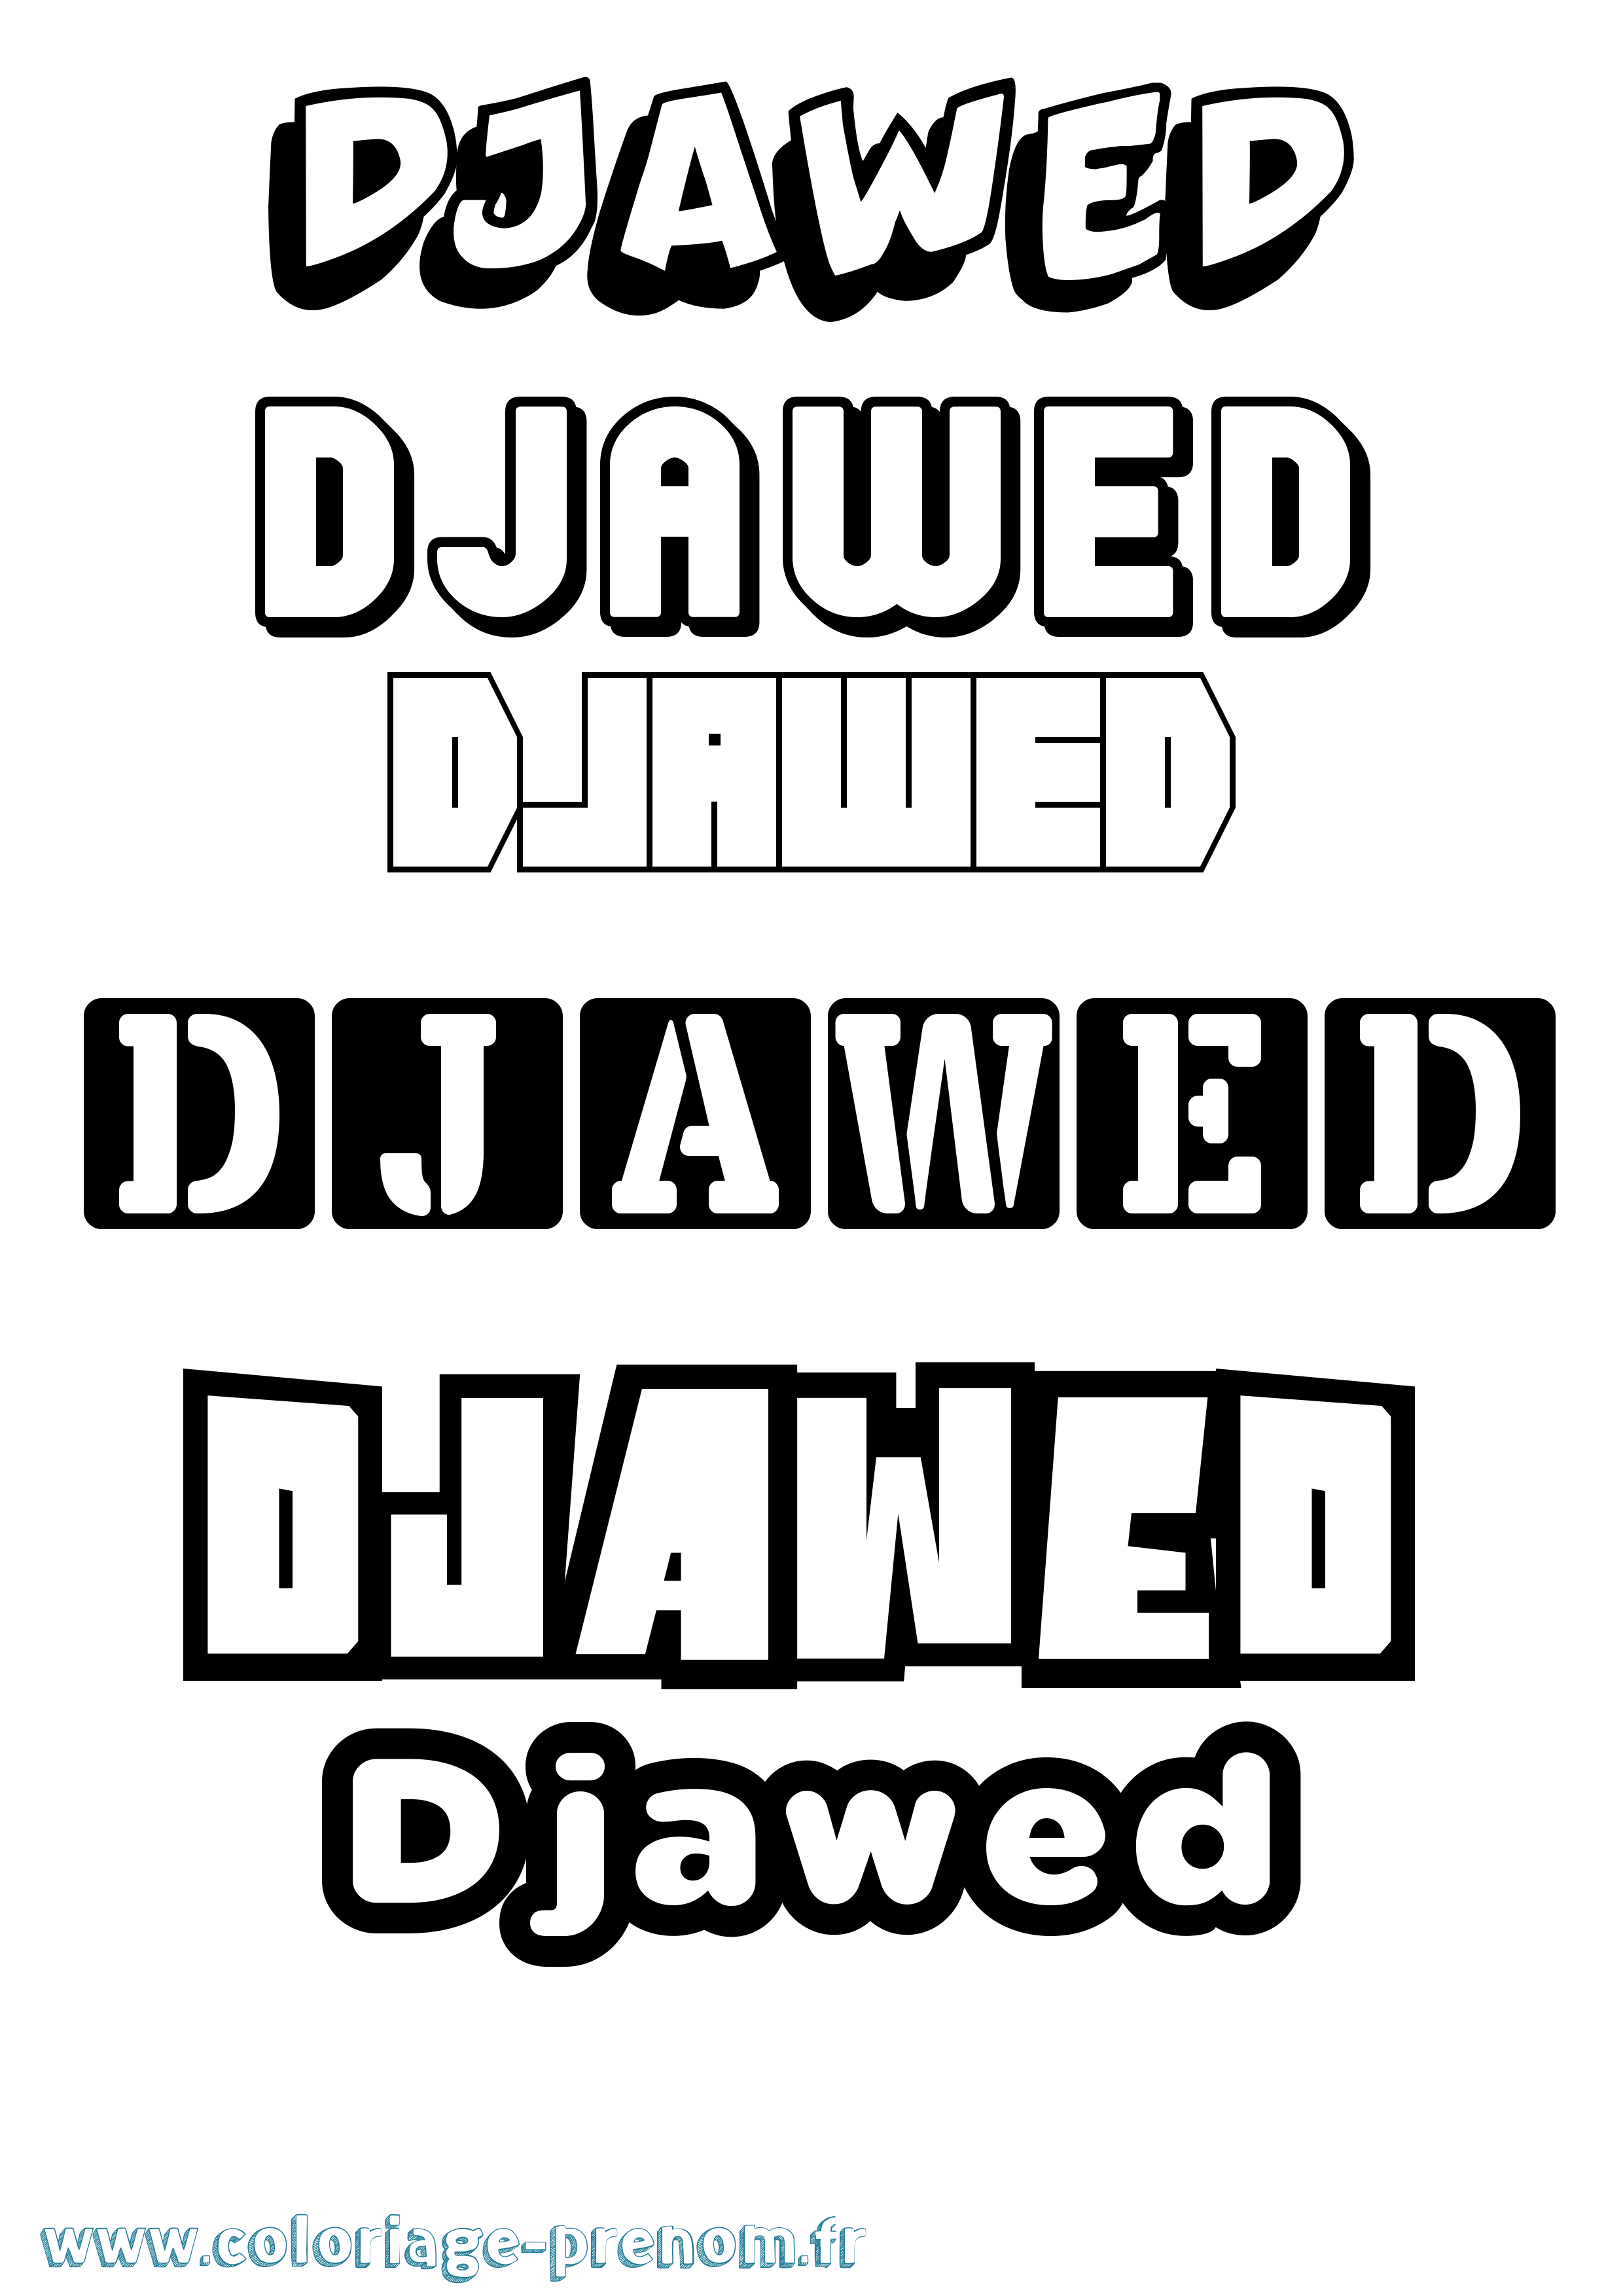 Coloriage prénom Djawed Simple